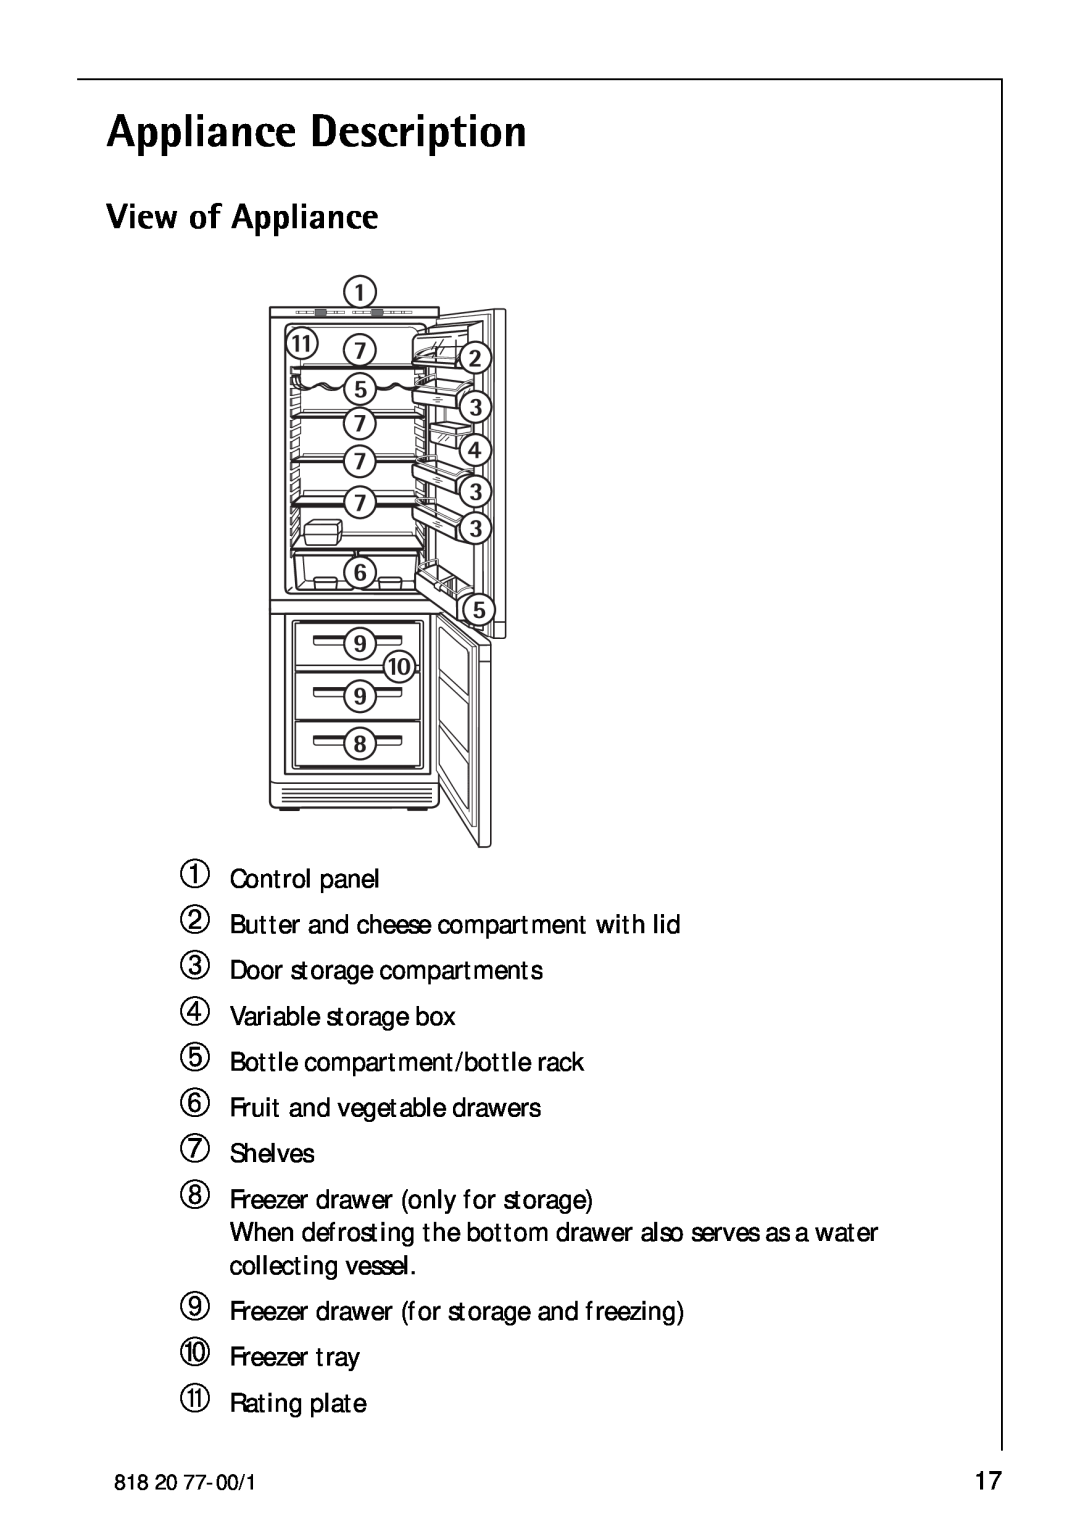 Electrolux 3985-7 KG manual Appliance Description, View of Appliance, ➀ ➁ ➂ ➃ ➄ ➅ ➆ ➇ 